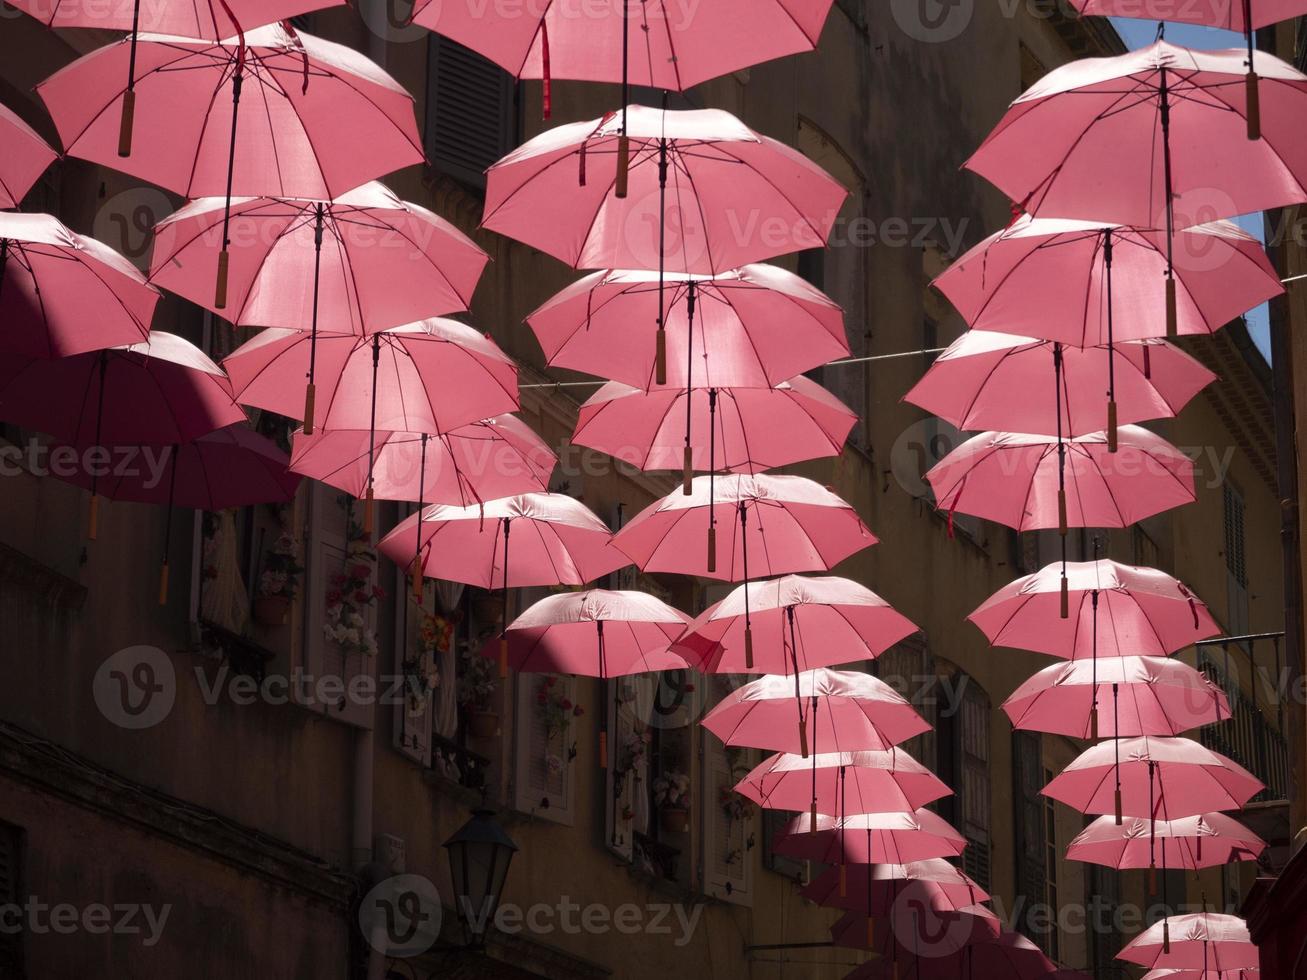 gras Frankrijk roze paraplu's straat foto